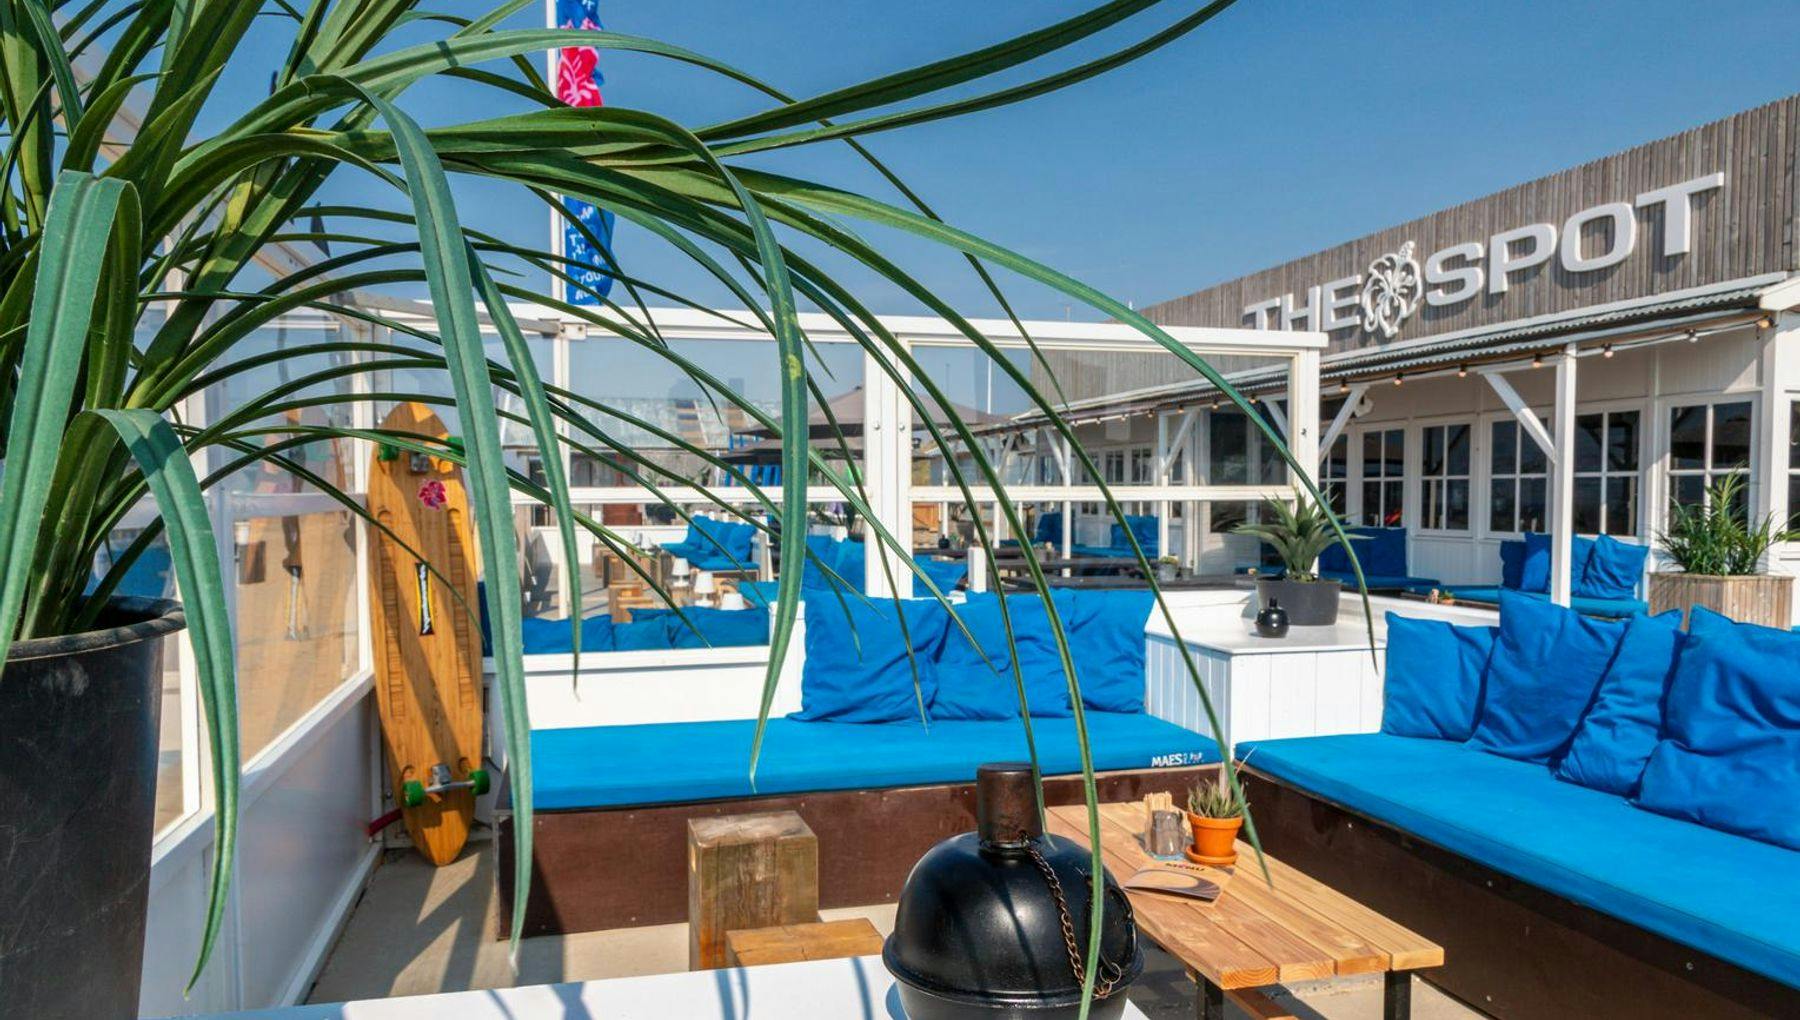 The Spot, beach club, Zandvoort exterior, terrace, seaside